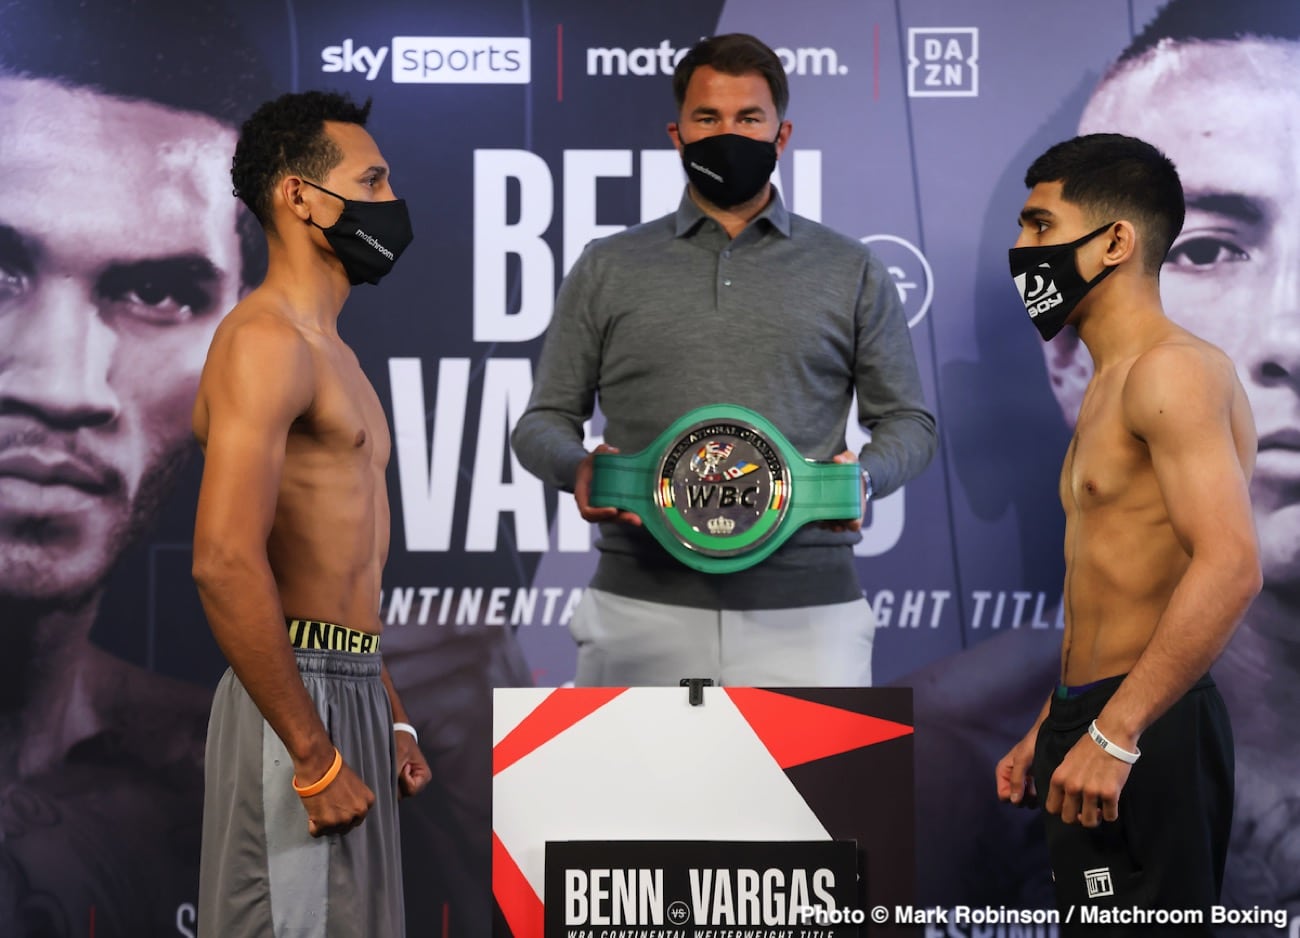 Watch LIVE: Benn vs Vargas Sky Sports Weigh In